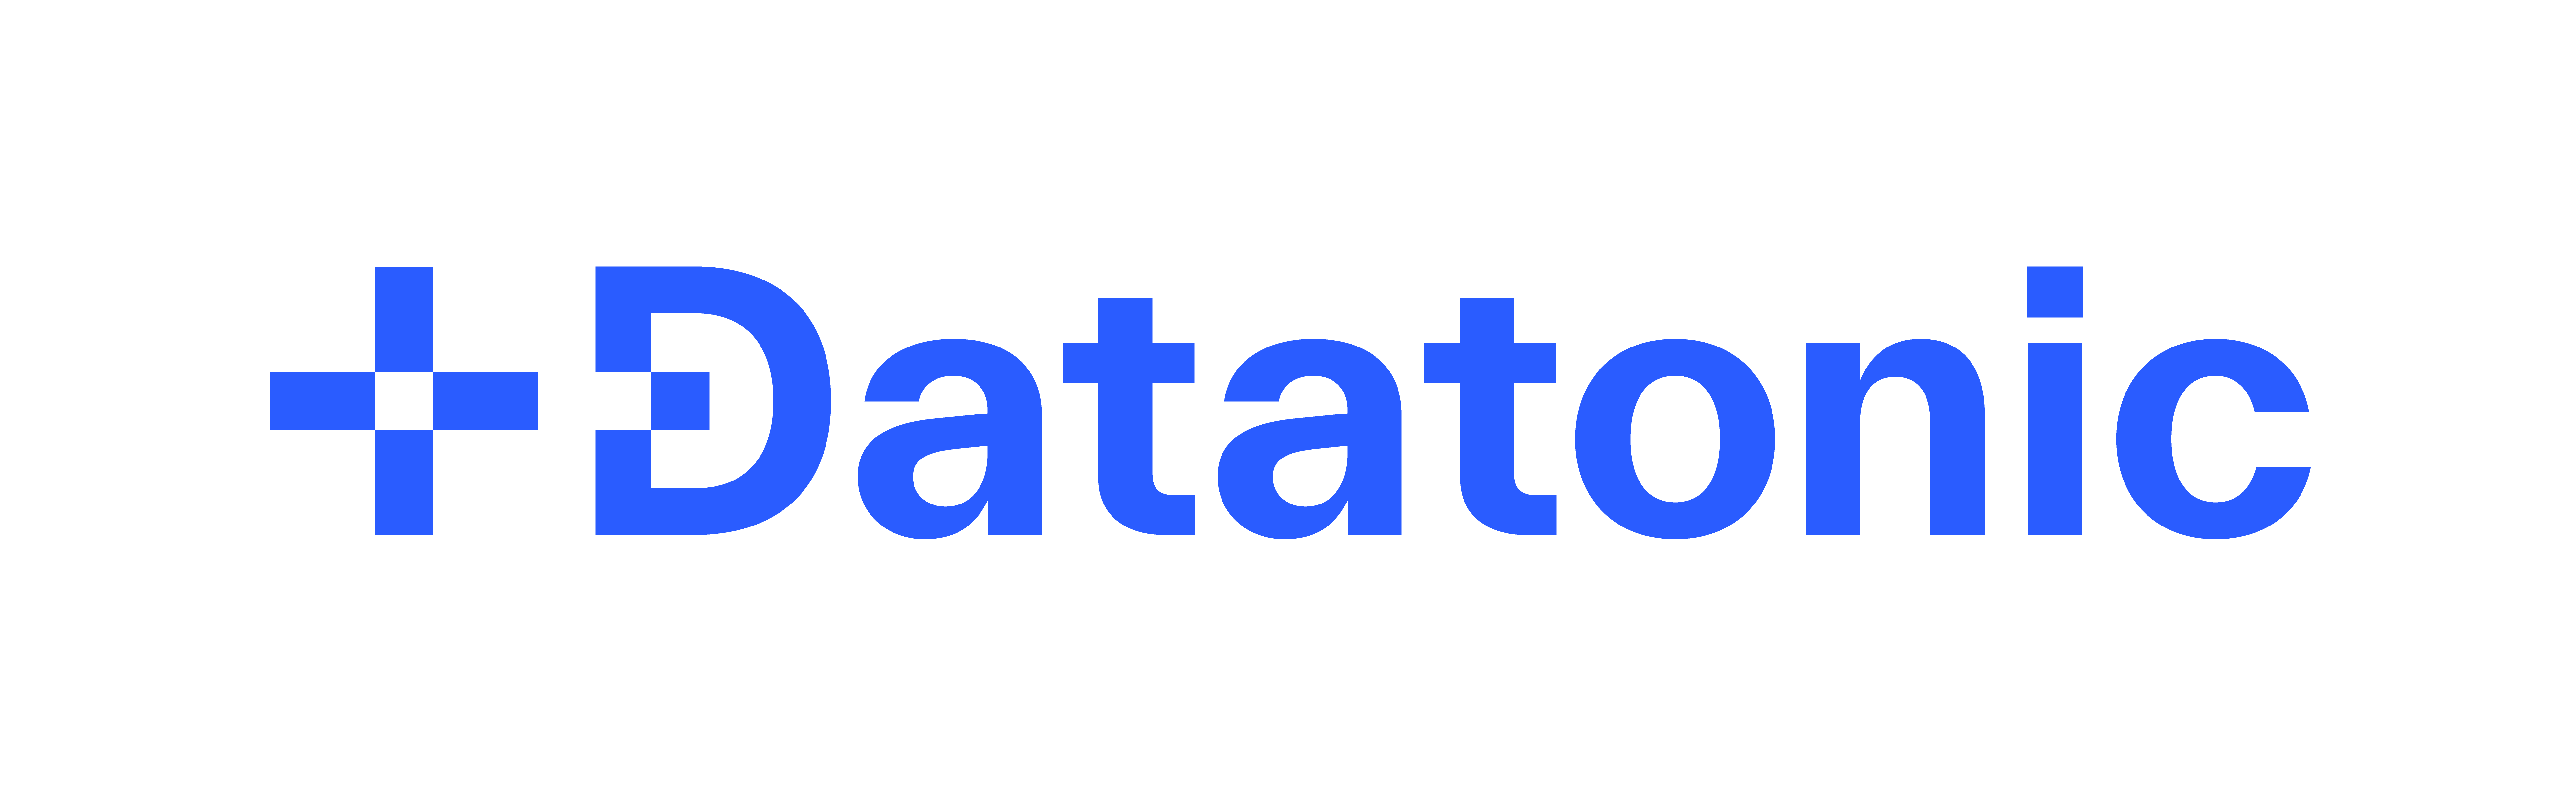 Logo Datatonic